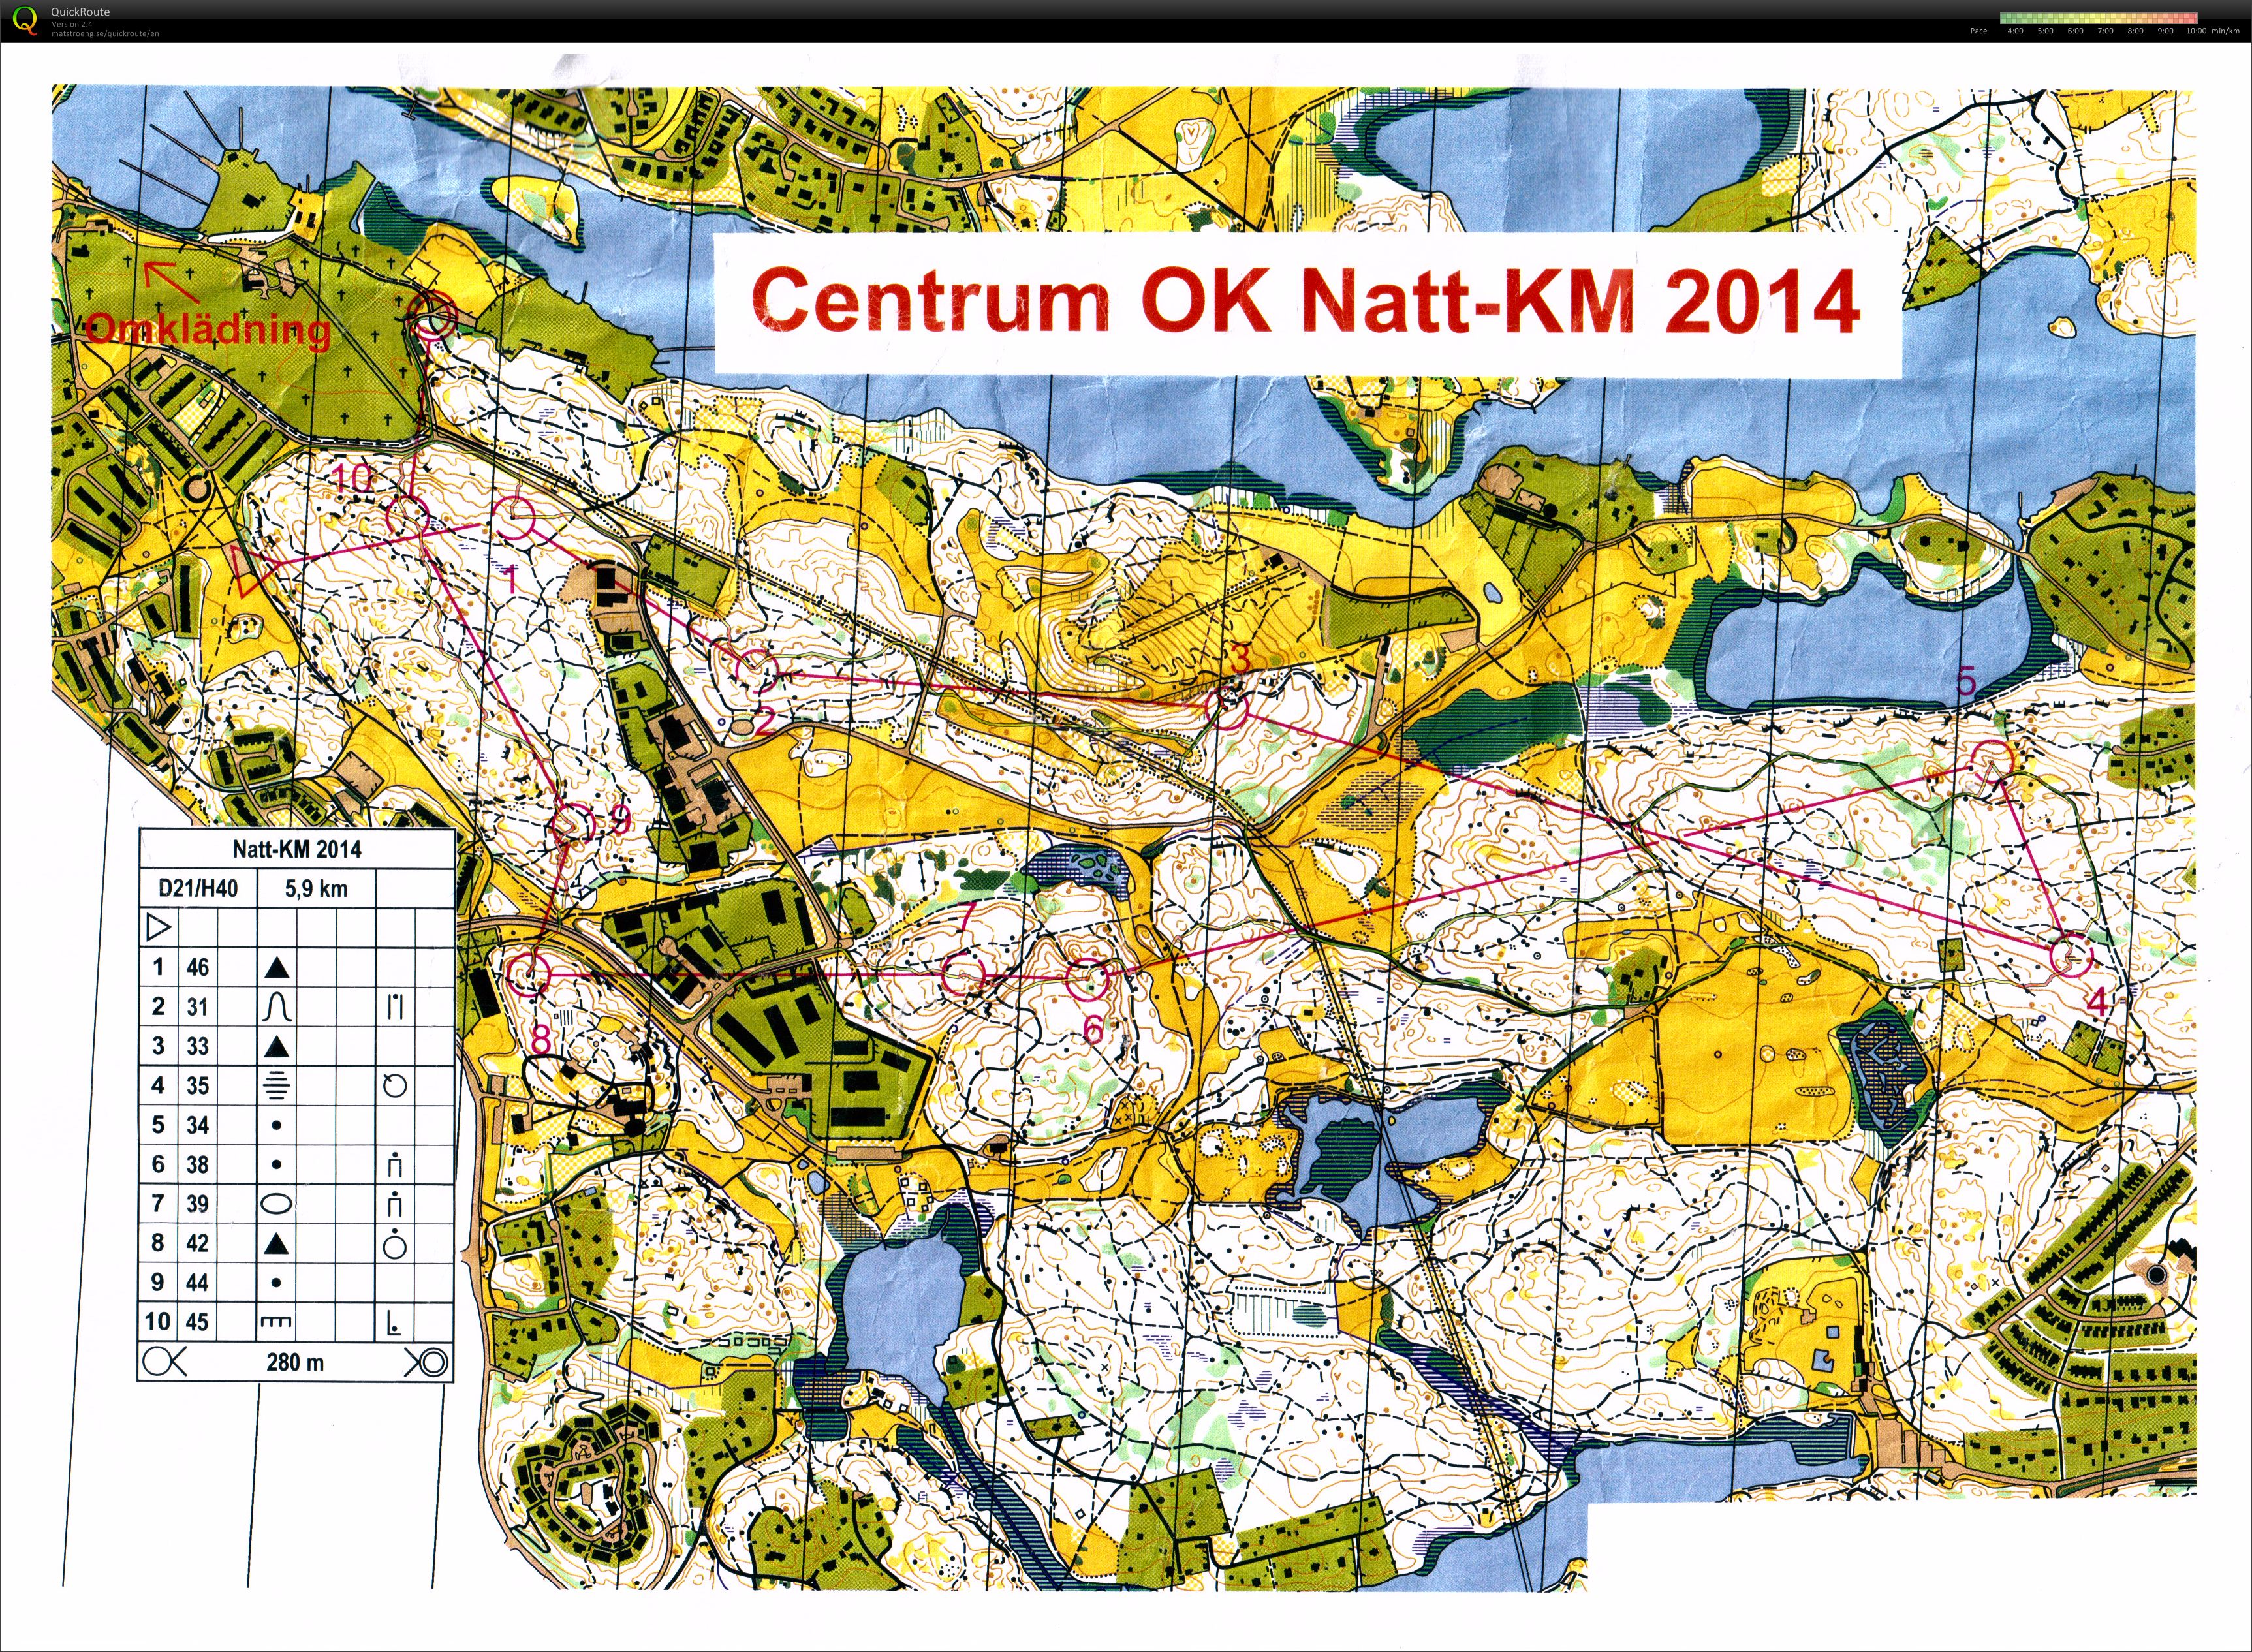 Centrum OK:s Natt-KM (2014-11-06)